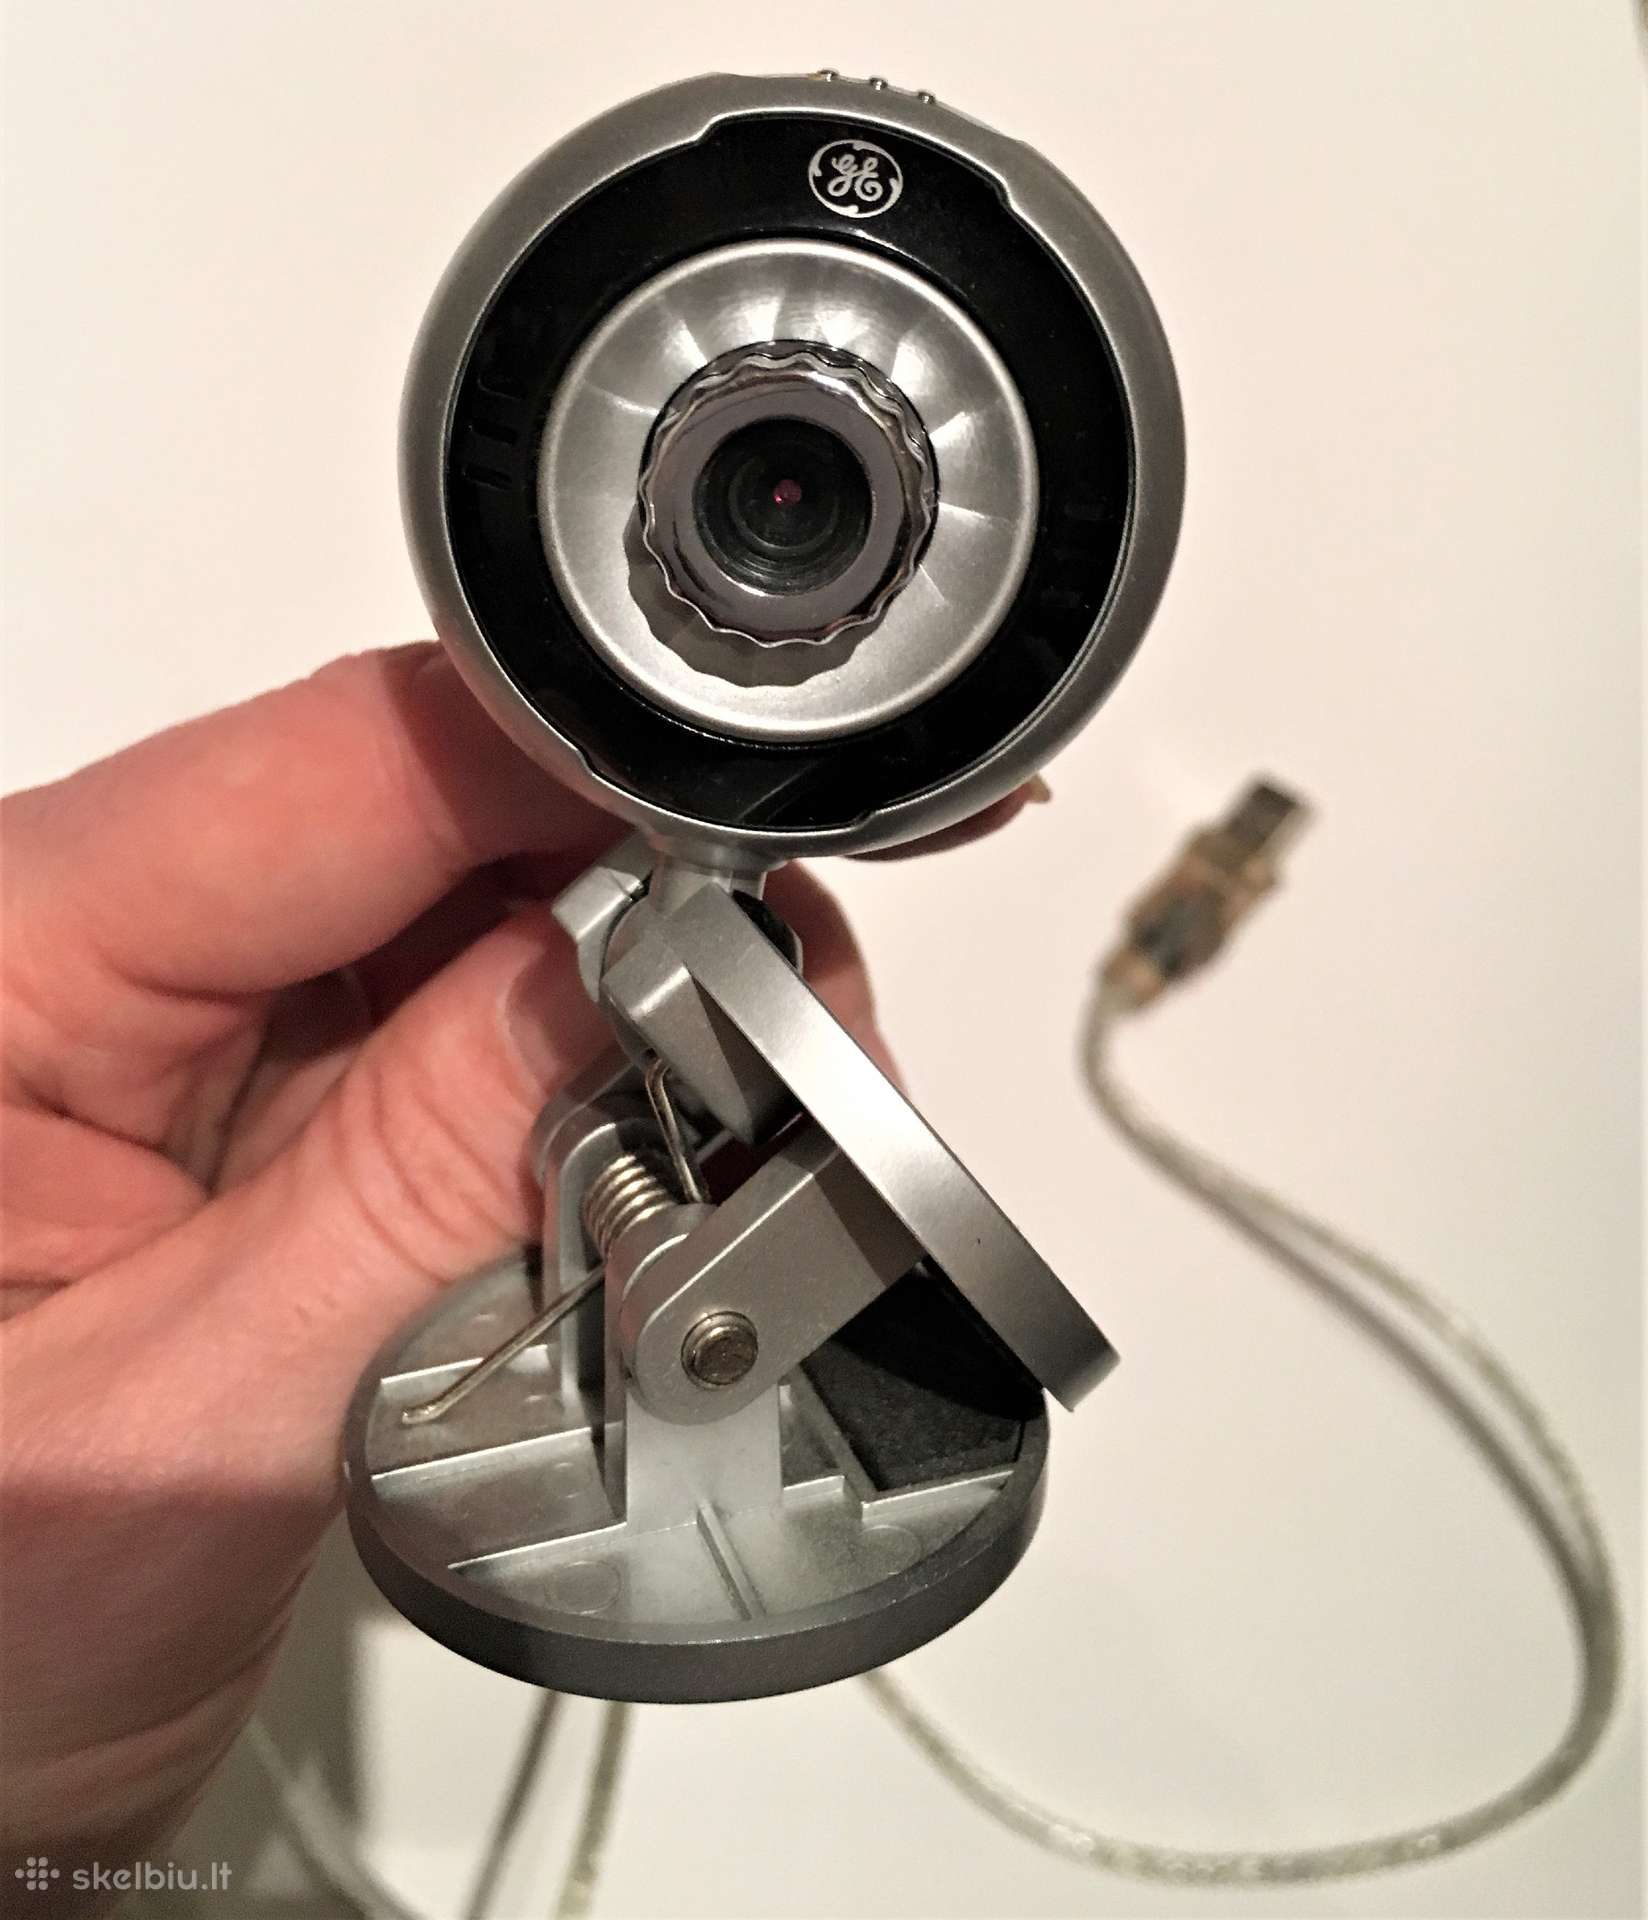 ge minicam pro installation software